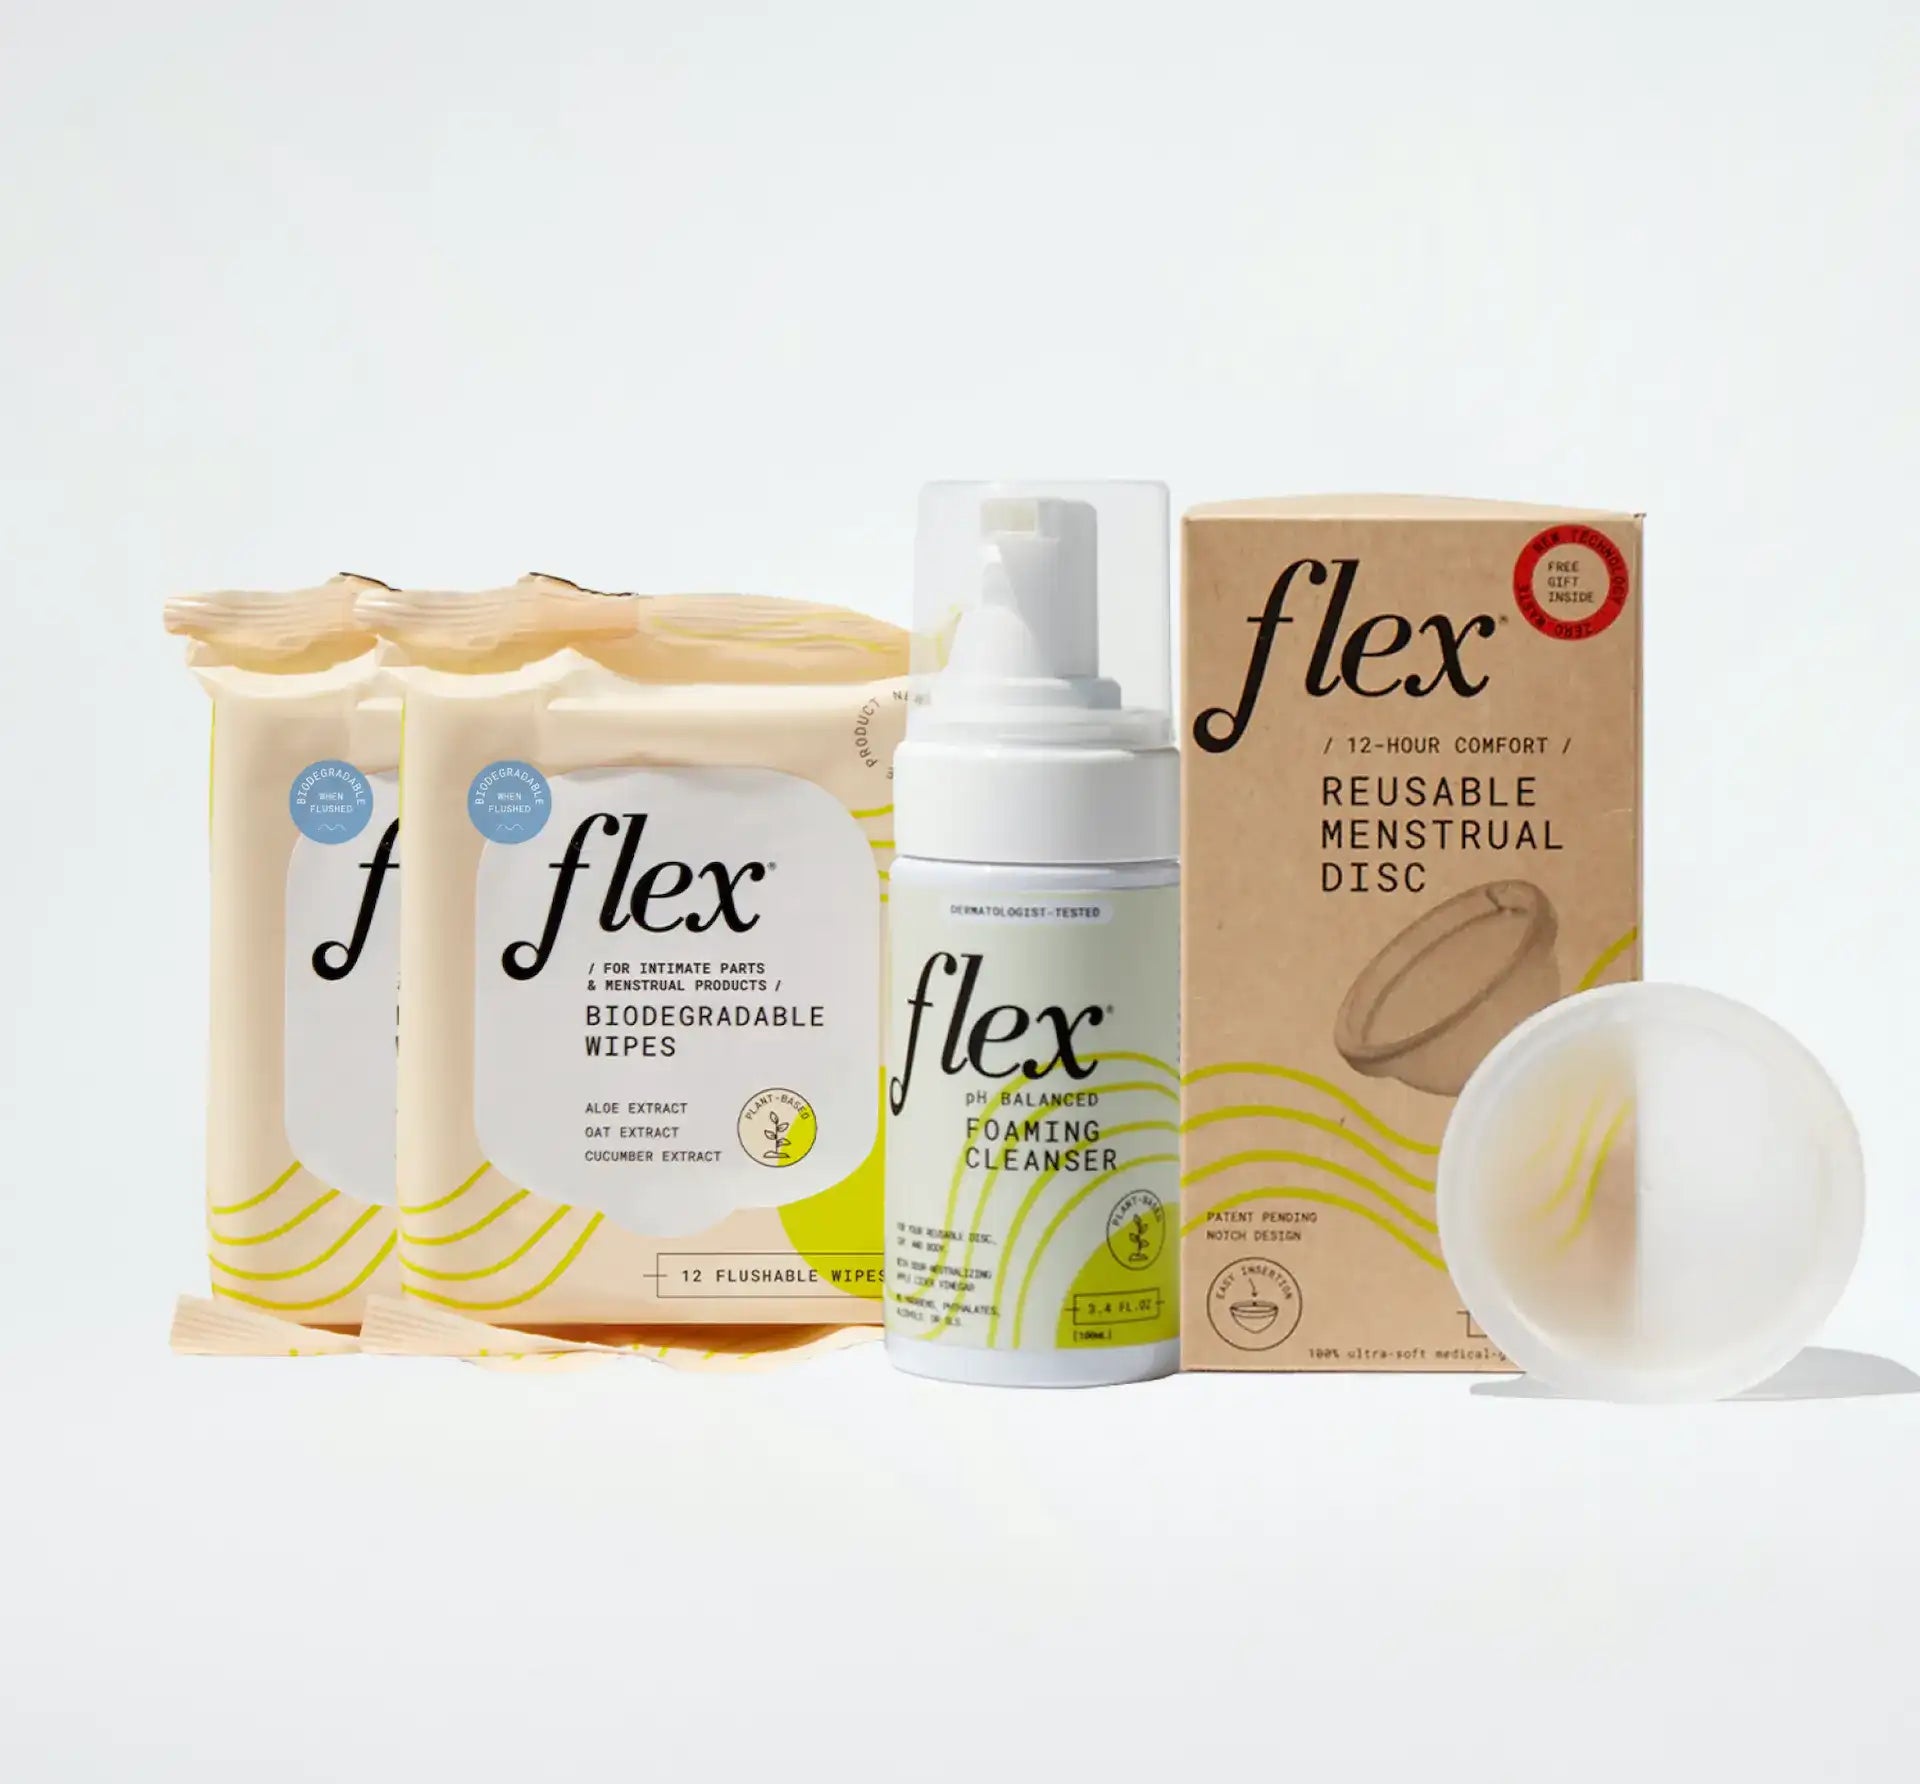 Flex reusable menstrual disc starter bundle with a reusable menstrual disc, foaming cleanser and biodegradable wipes